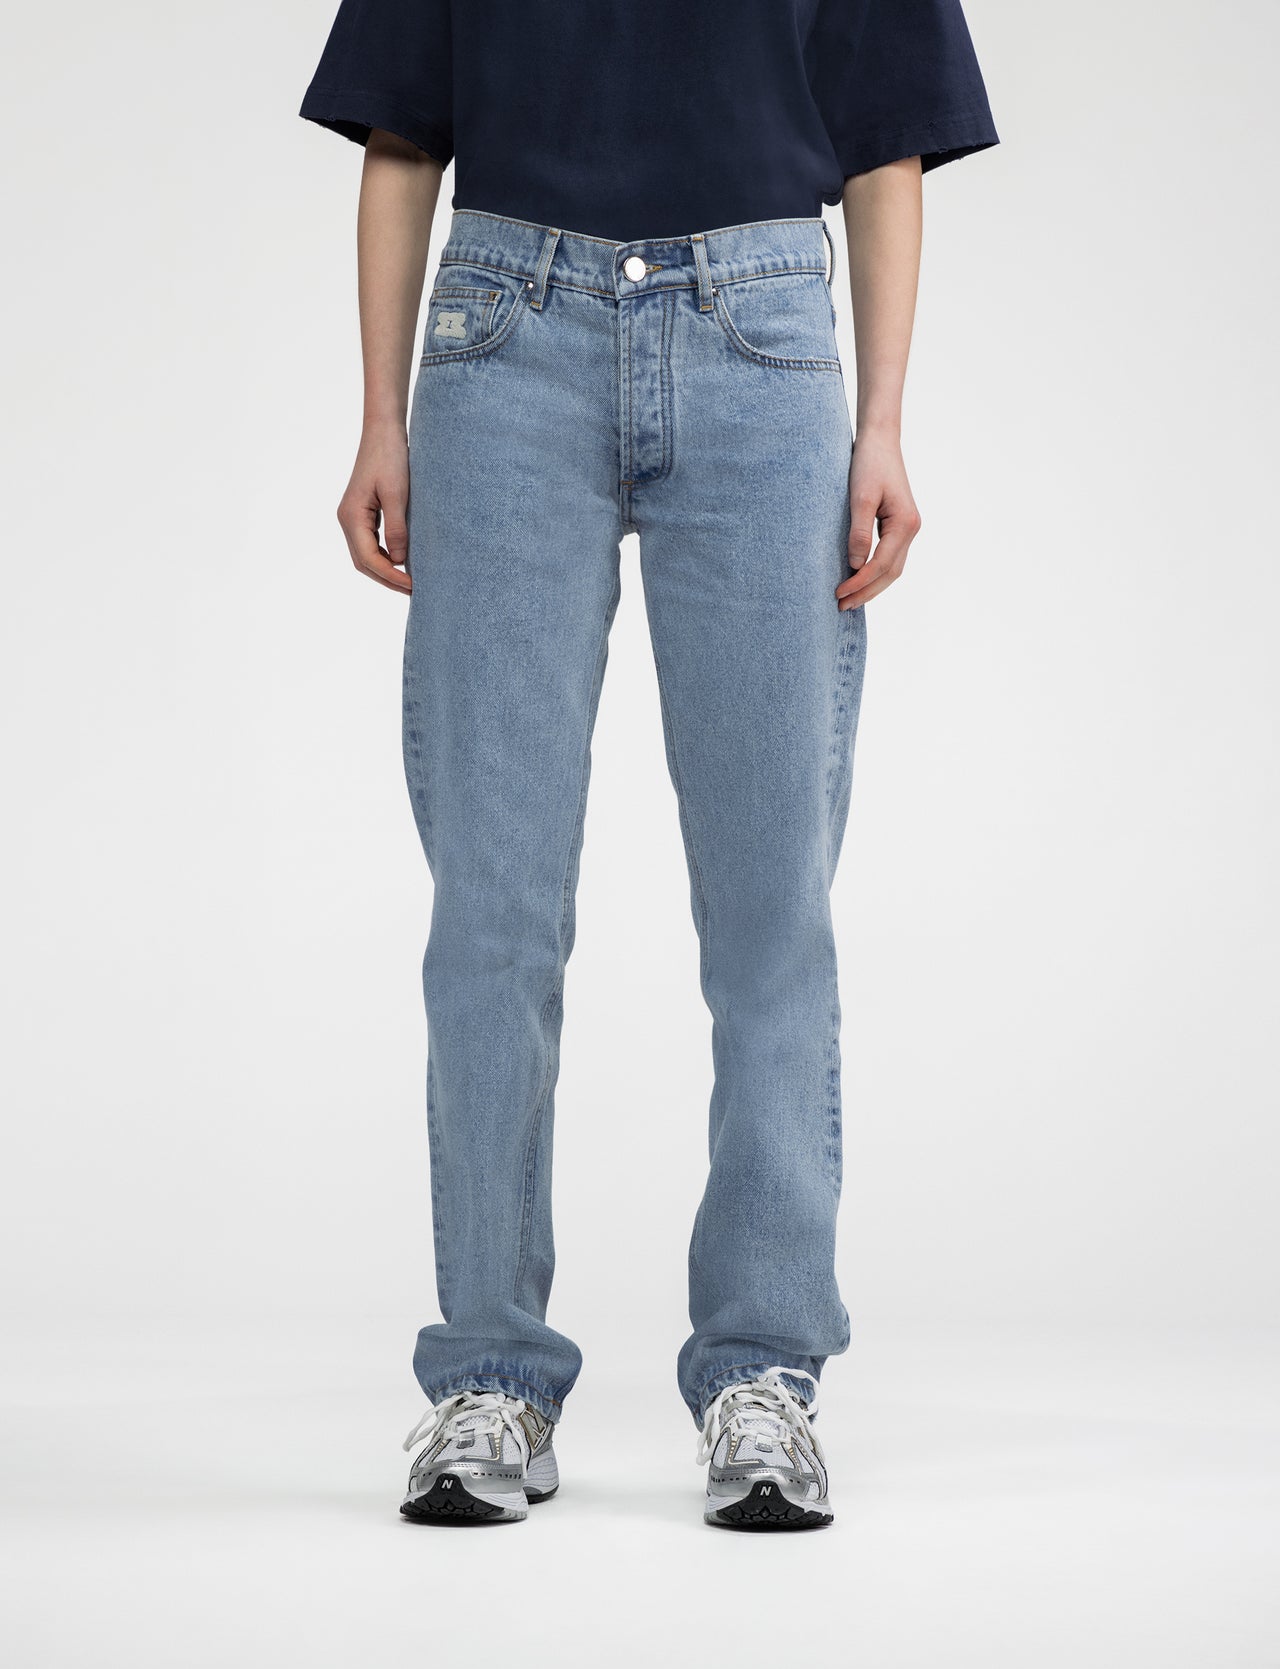 Regular straight fit jeans in light blue